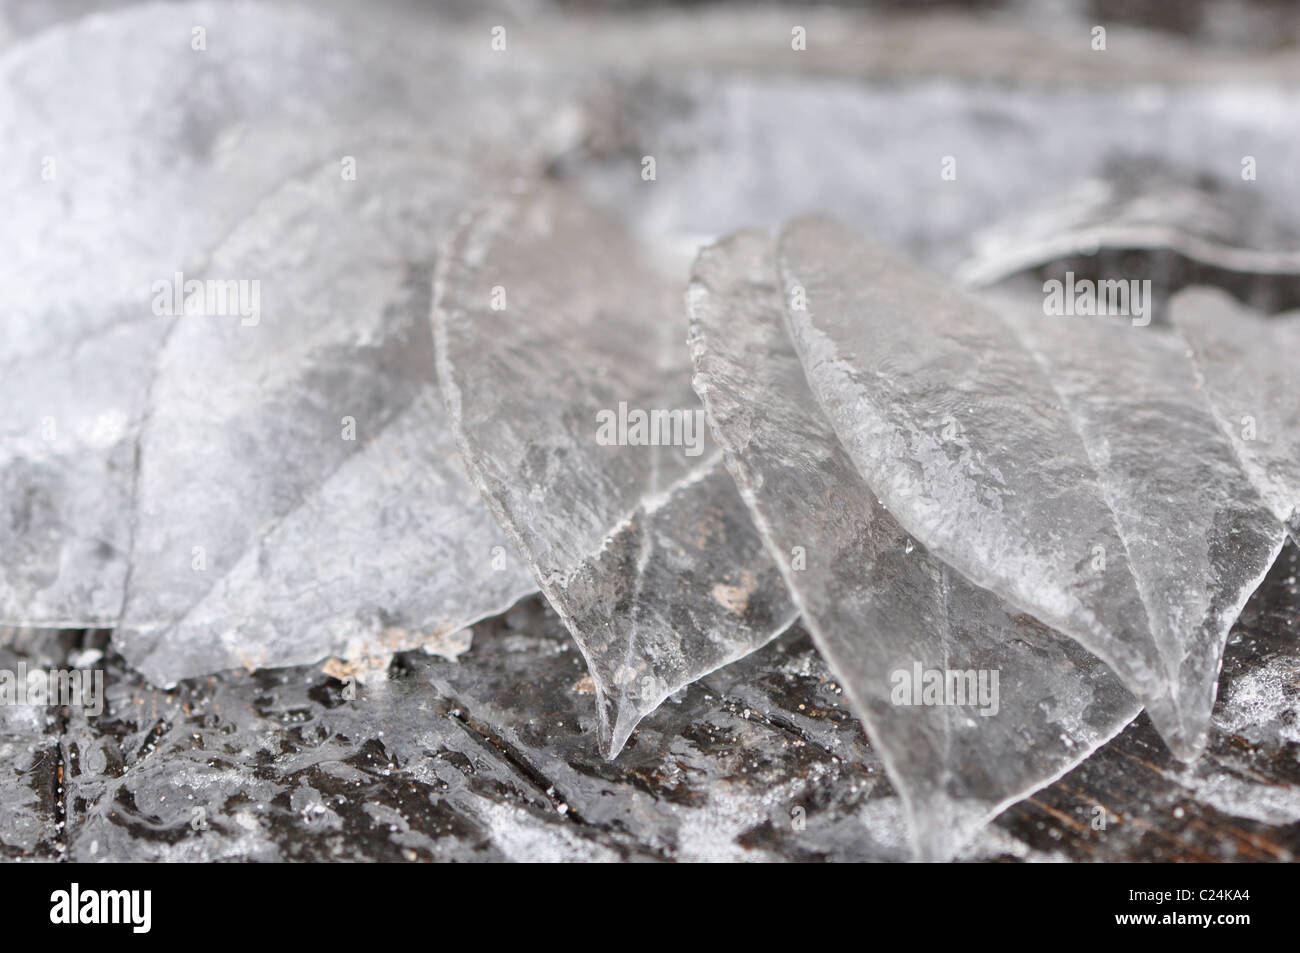 Molde para hielo fotografías e imágenes de alta resolución - Alamy